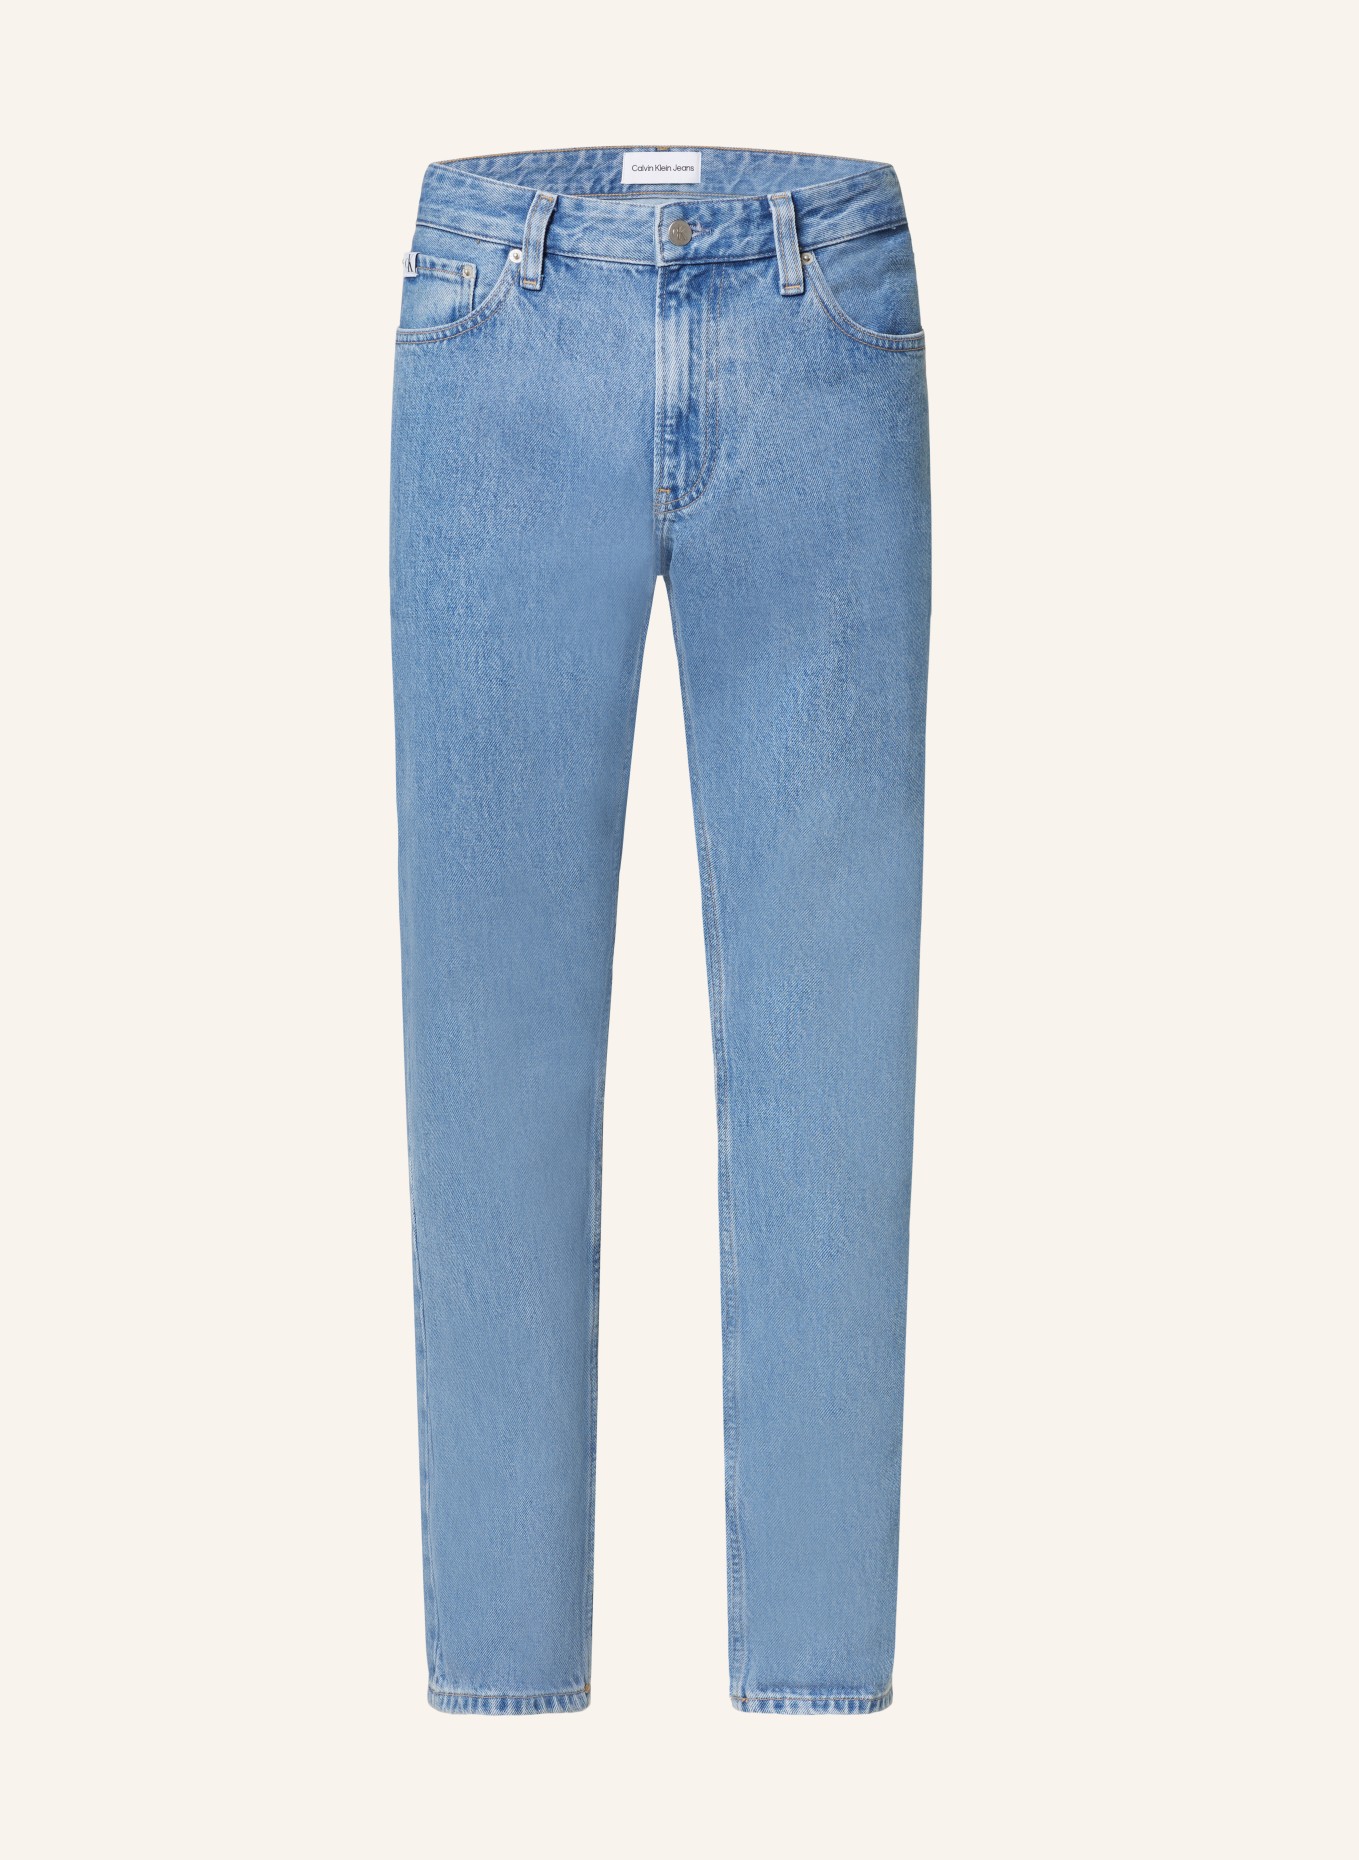 Calvin Klein Jeans Jeans AUTHENTIC STRAIGHT Straight Fit, Farbe: 1AA Denim Light (Bild 1)